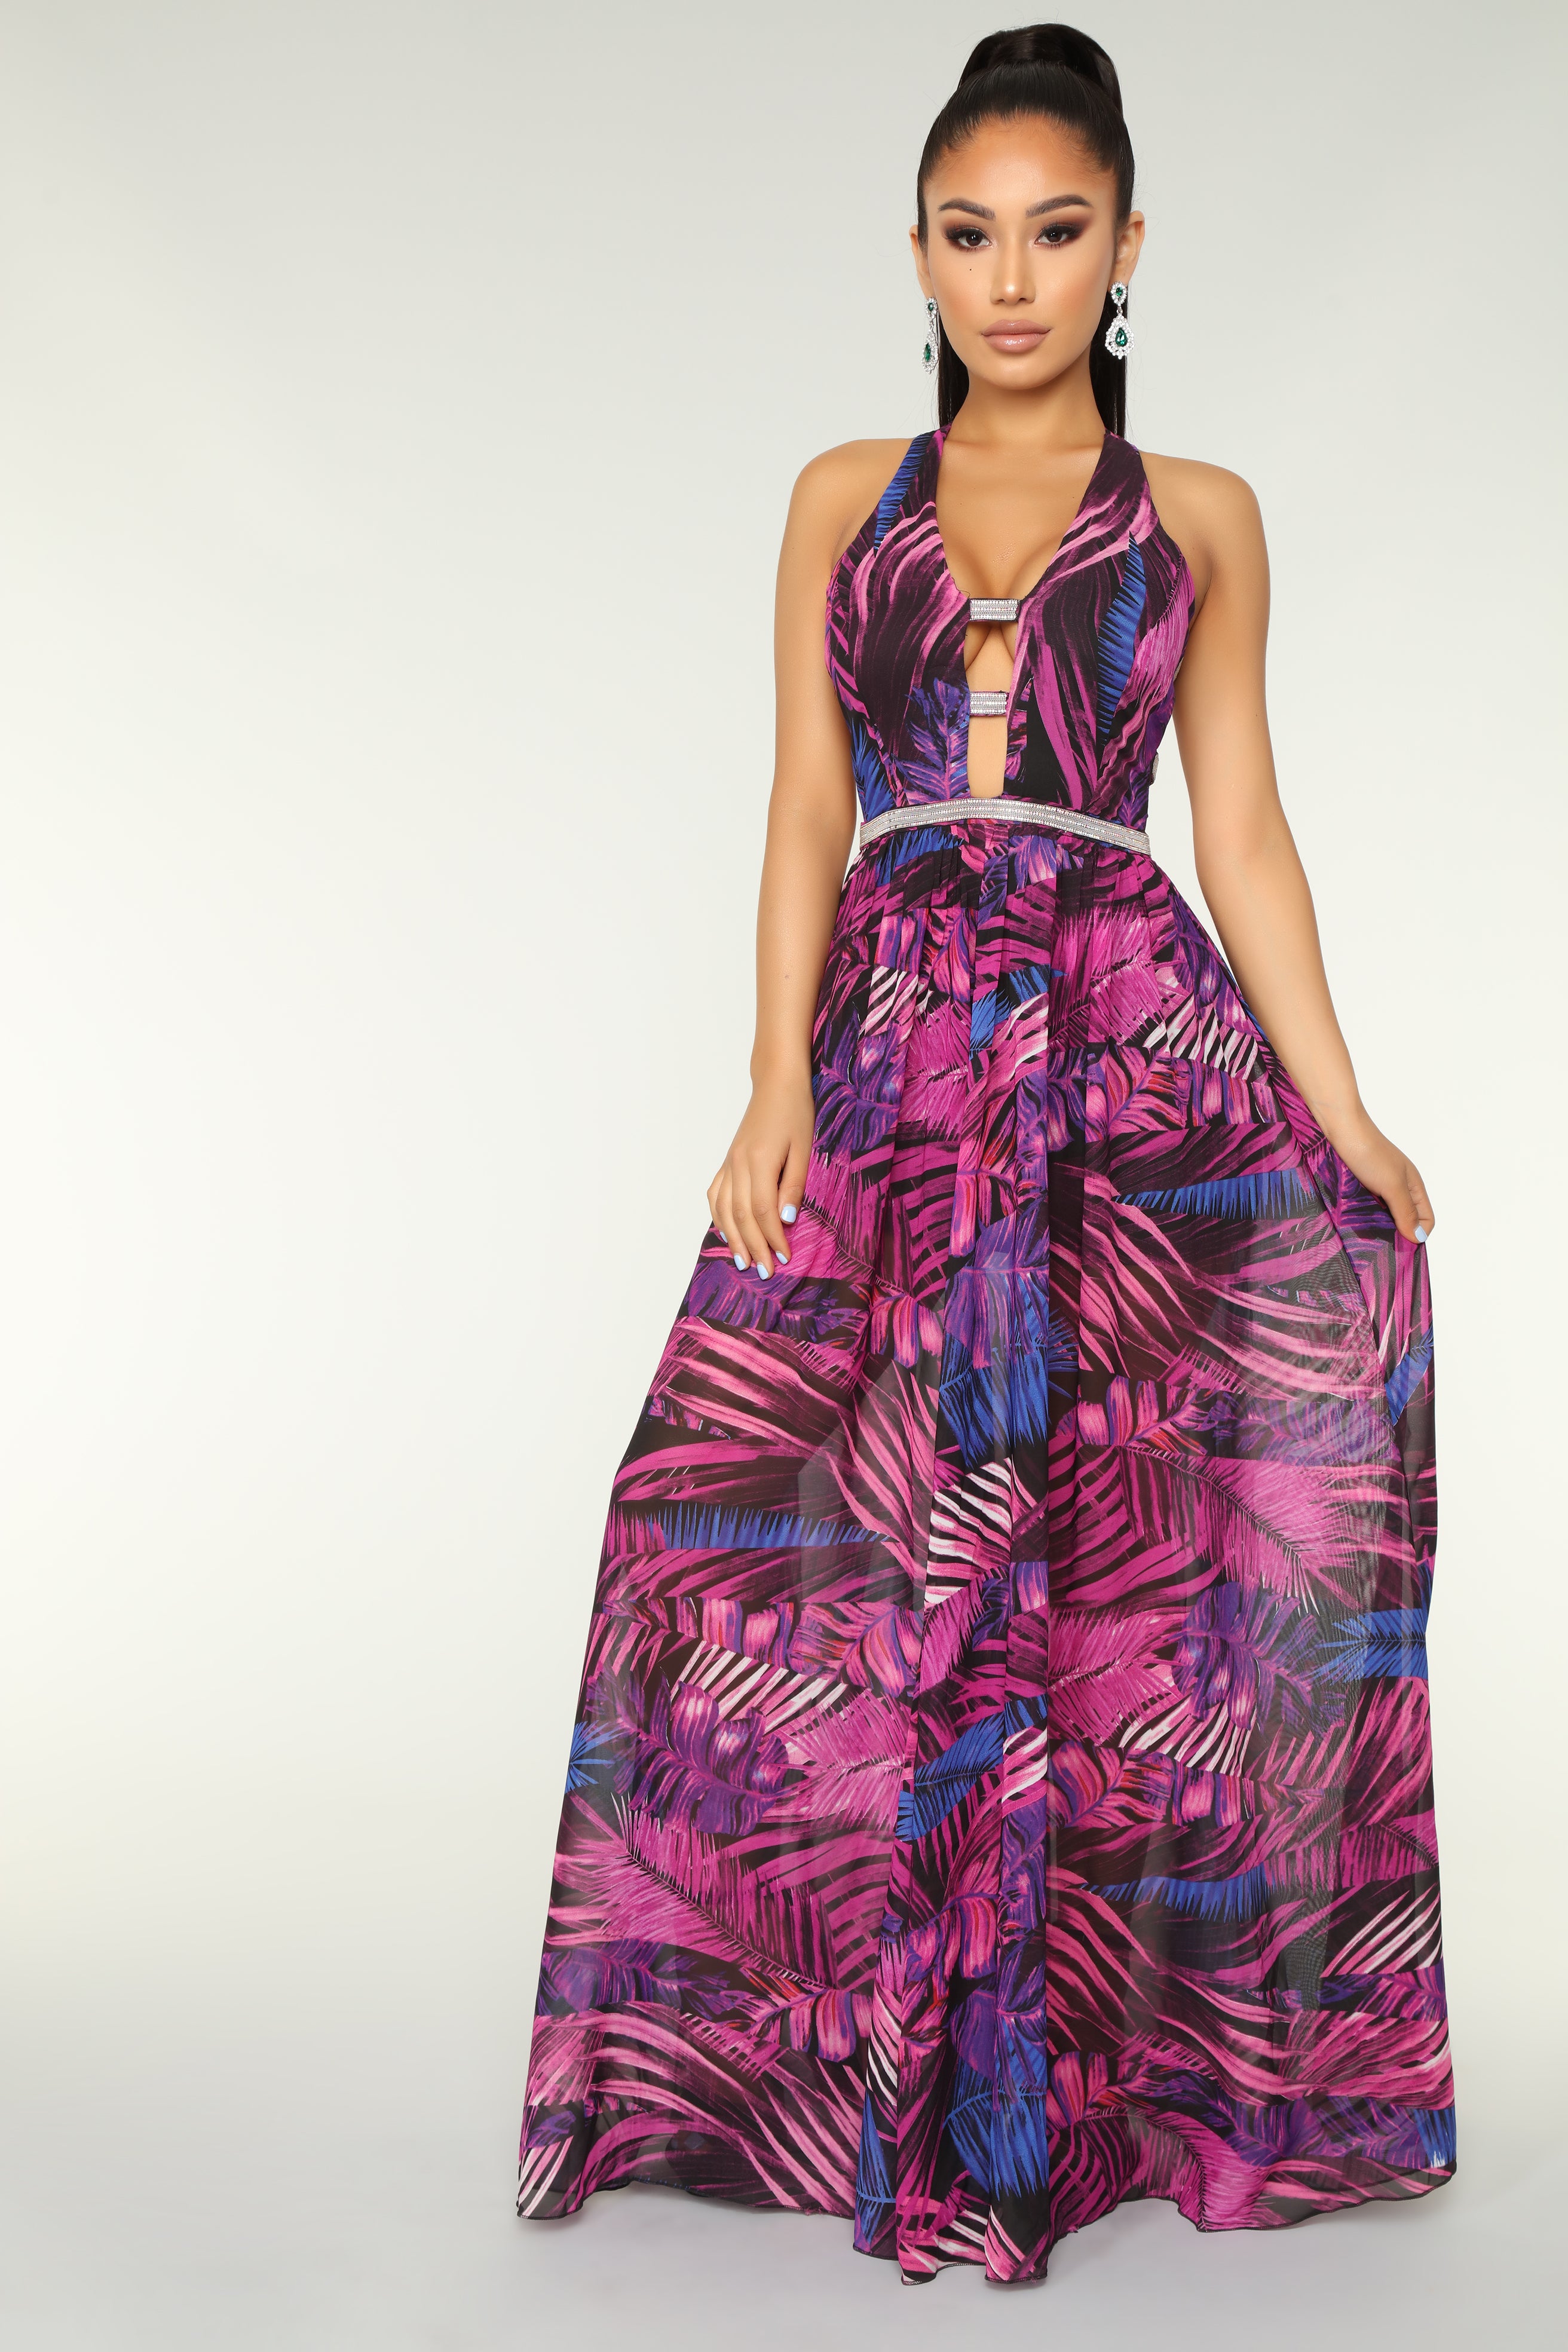 fashion nova lilac dress